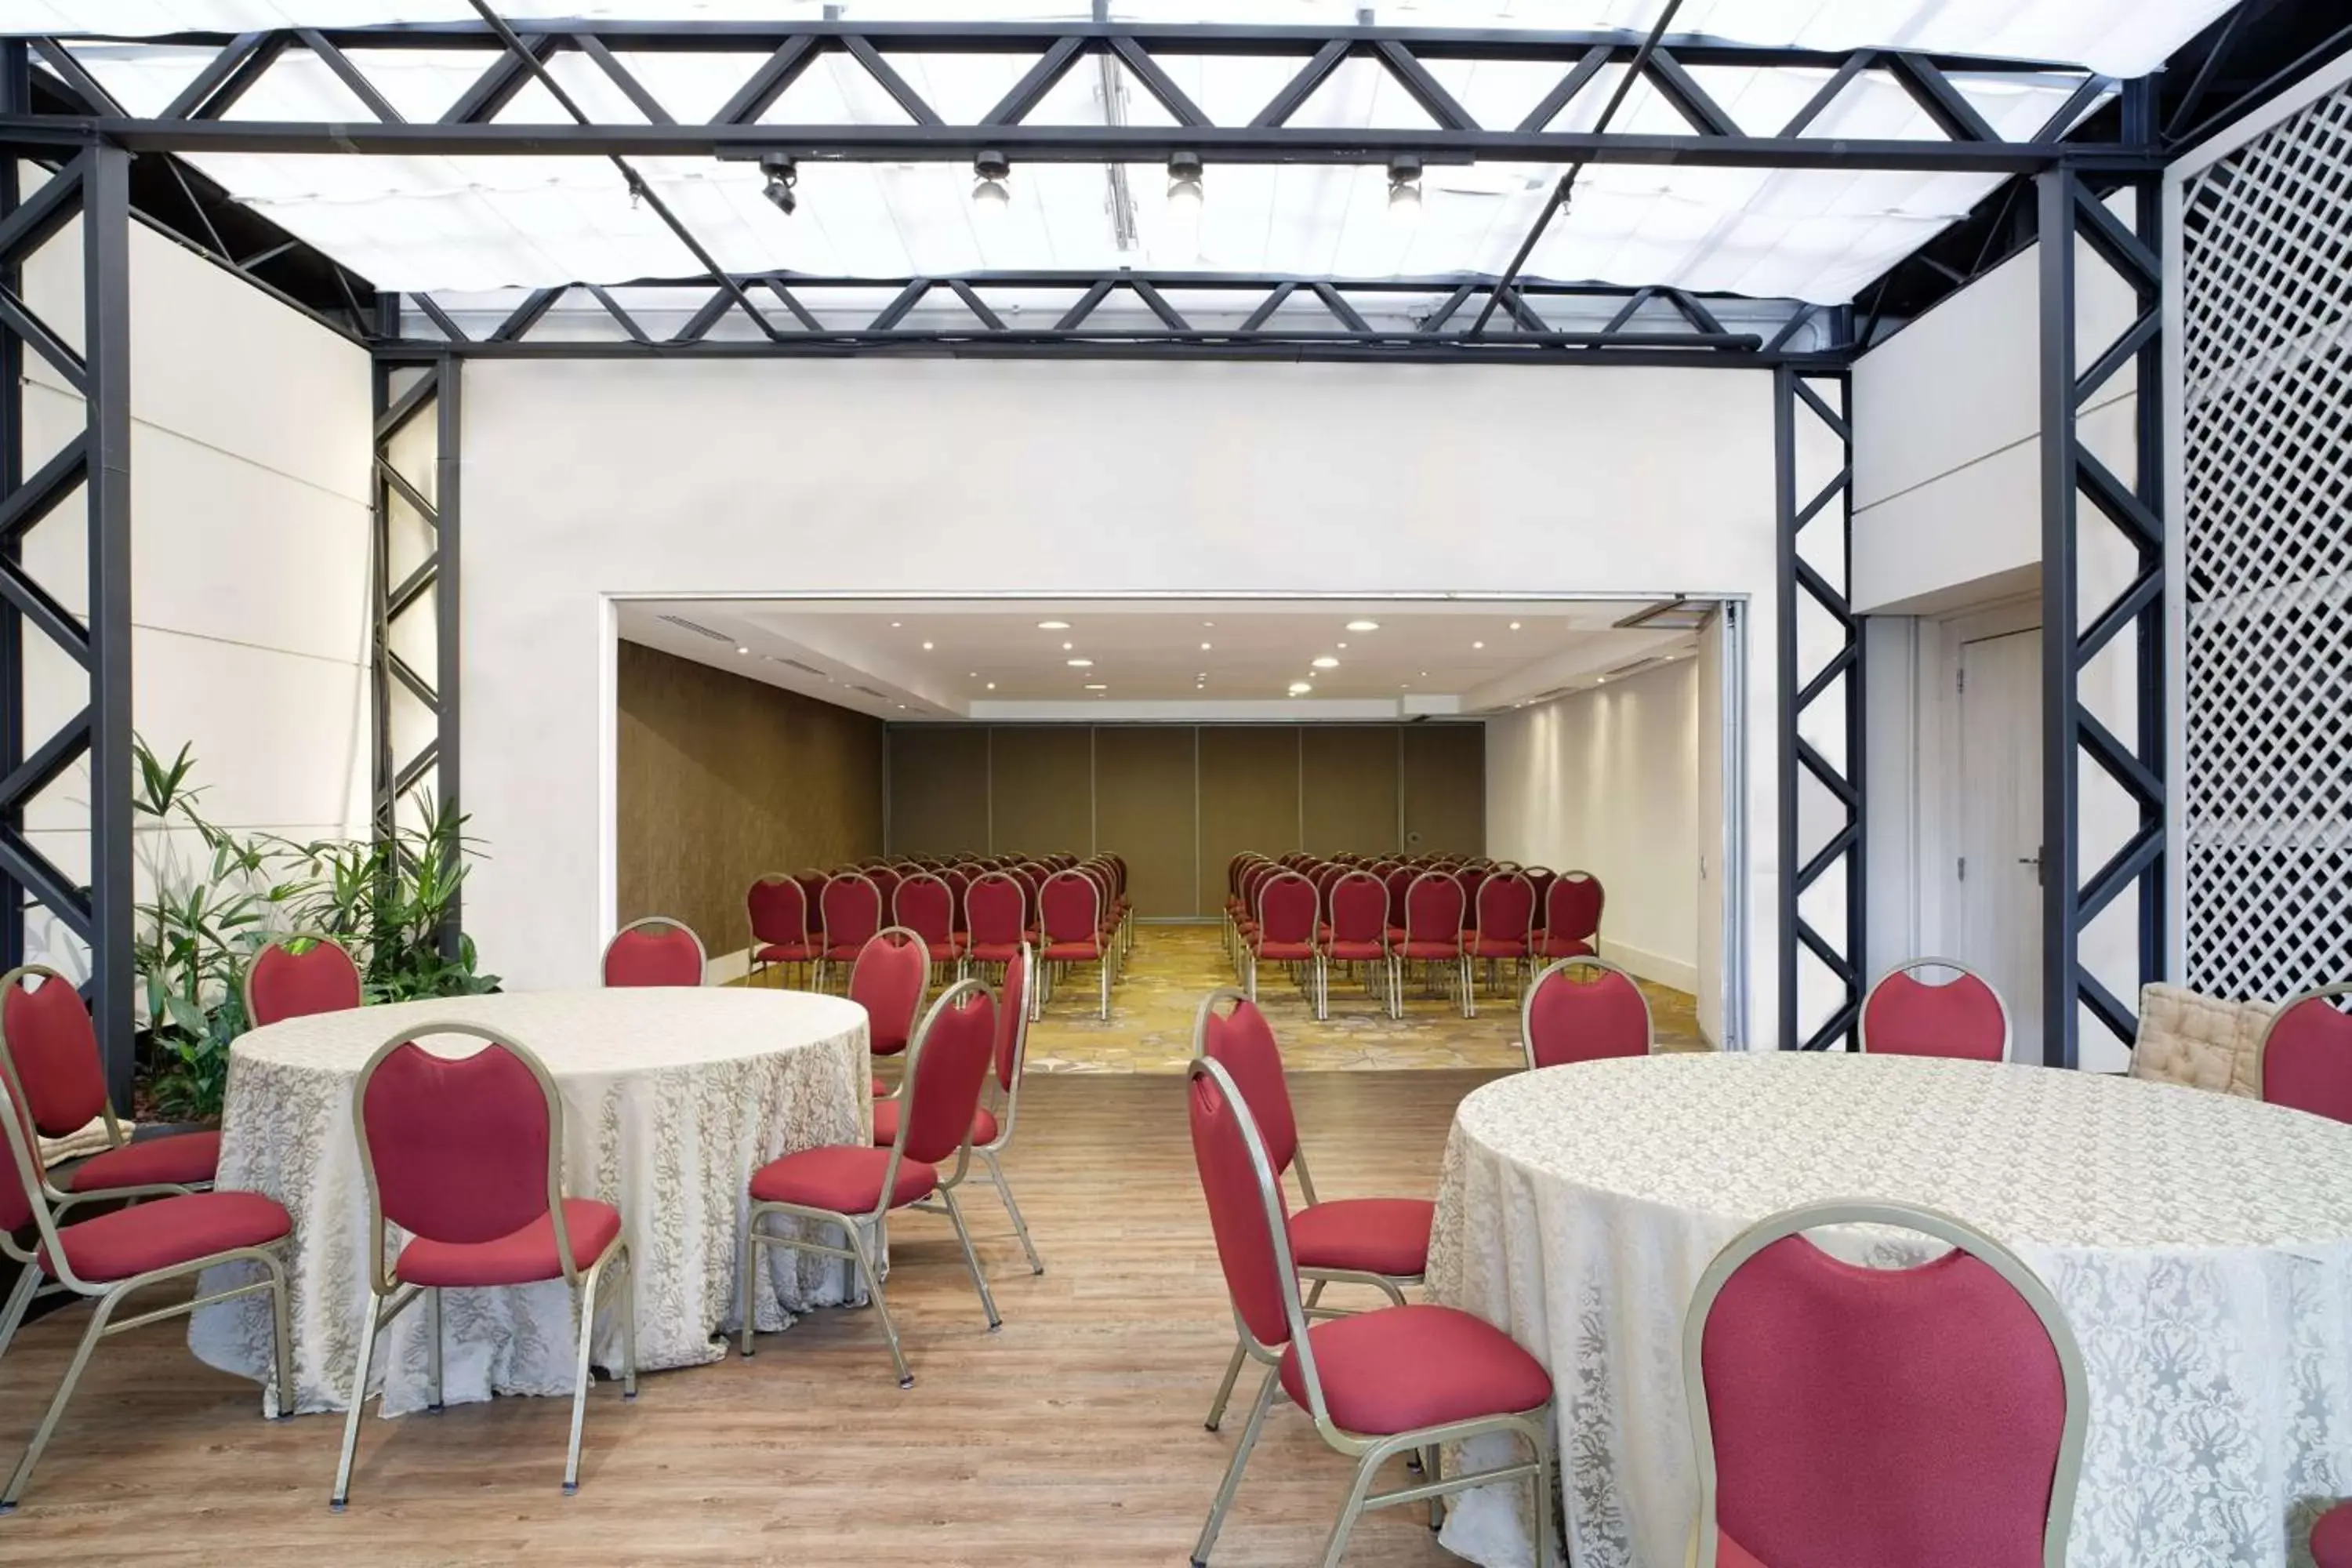 Meeting/conference room, Banquet Facilities in Hilton Porto Alegre, Brazil